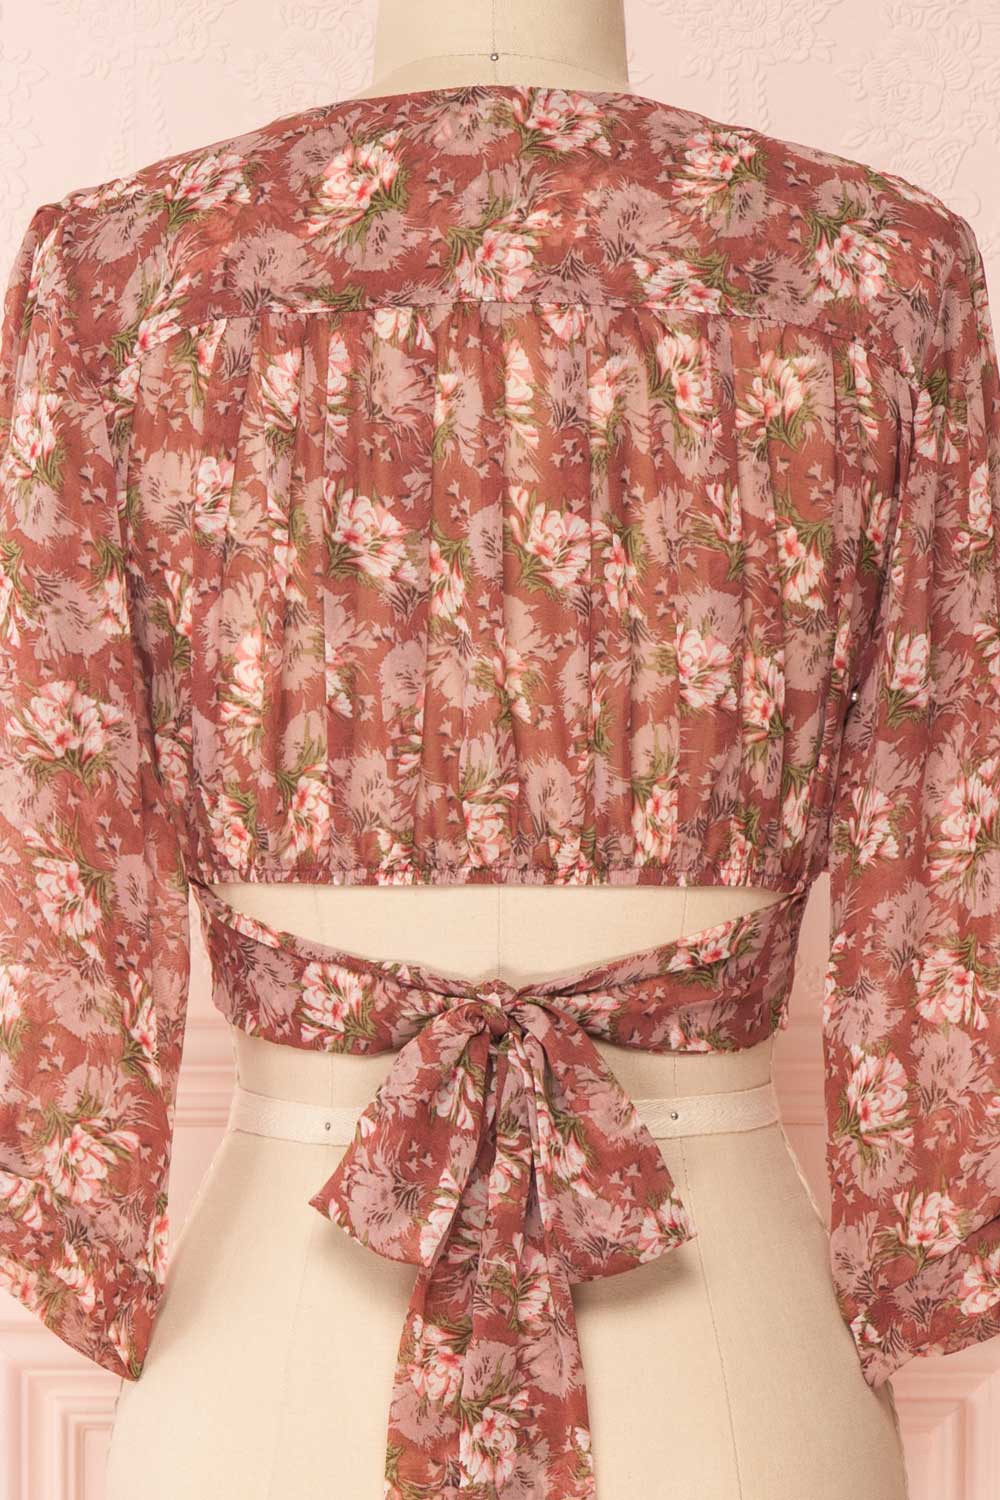 Erasma Pink Floral Chiffon Crop Top | Boutique 1861 back close-up